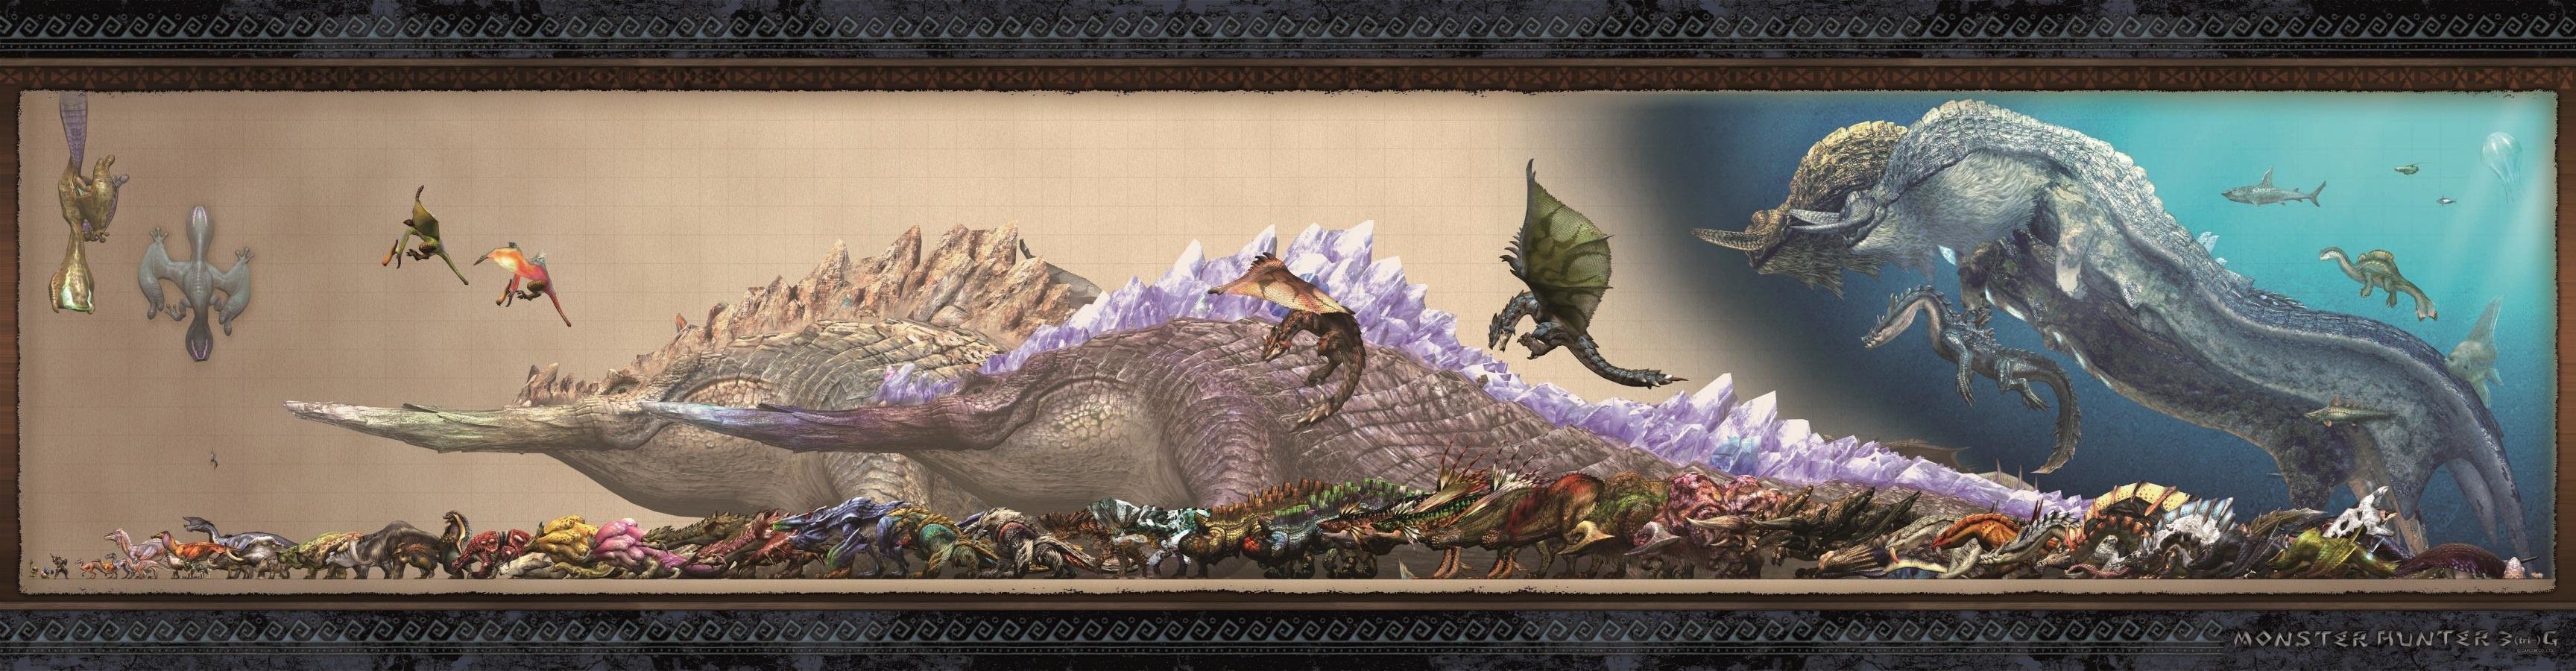 Best Monster Hunter wallpaper ID:294463 for High Resolution triple screen 3456x900 desktop